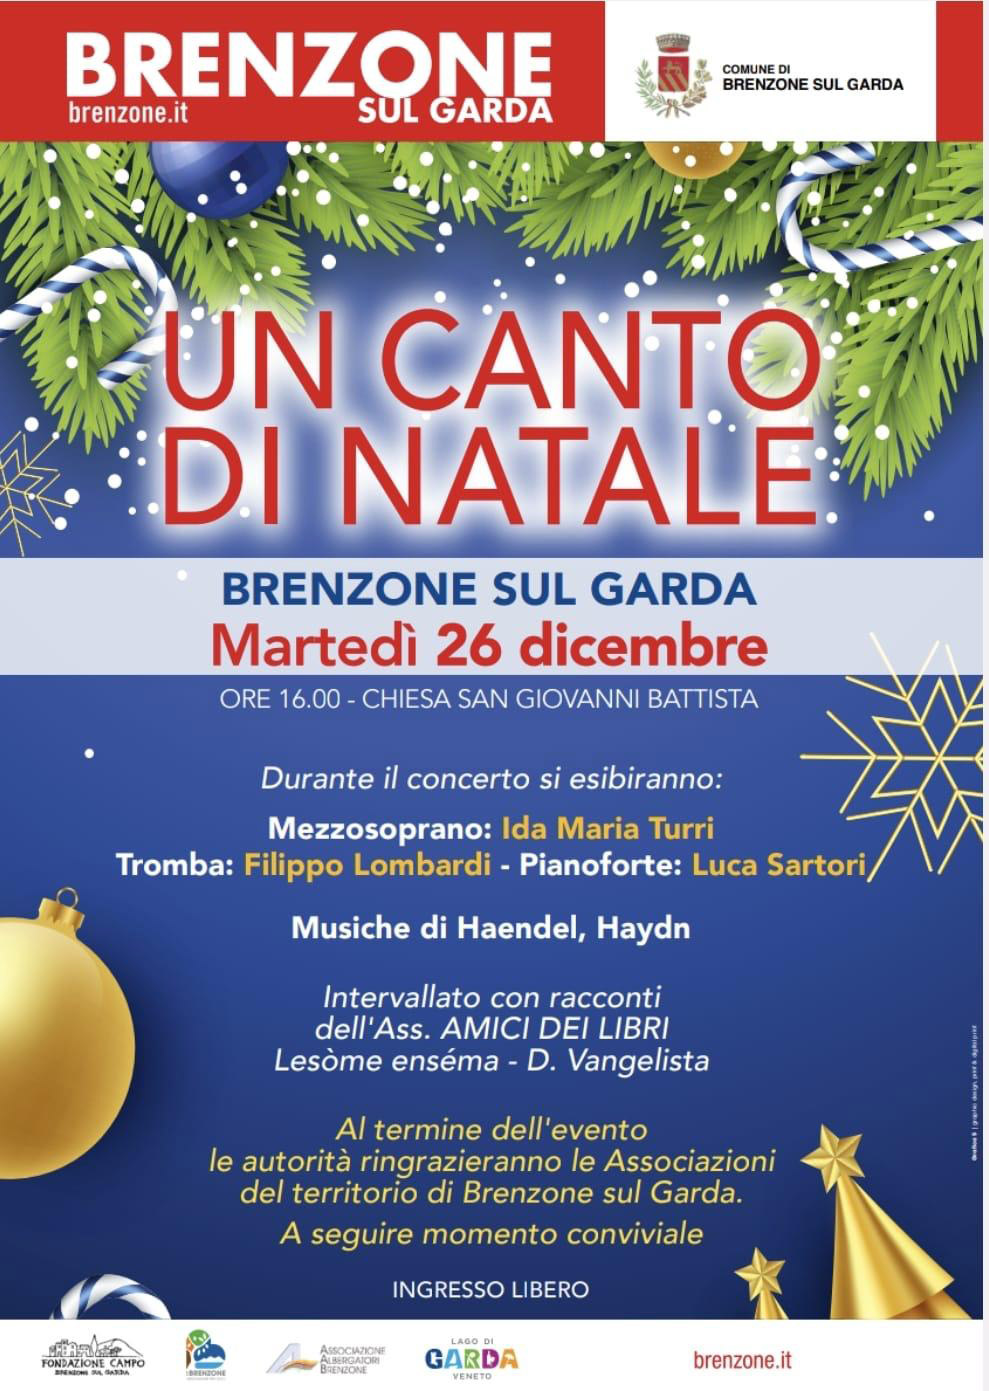 Coro: Canto di Natale - Chor: Weihnachtslied - Chorus: Christmas carol